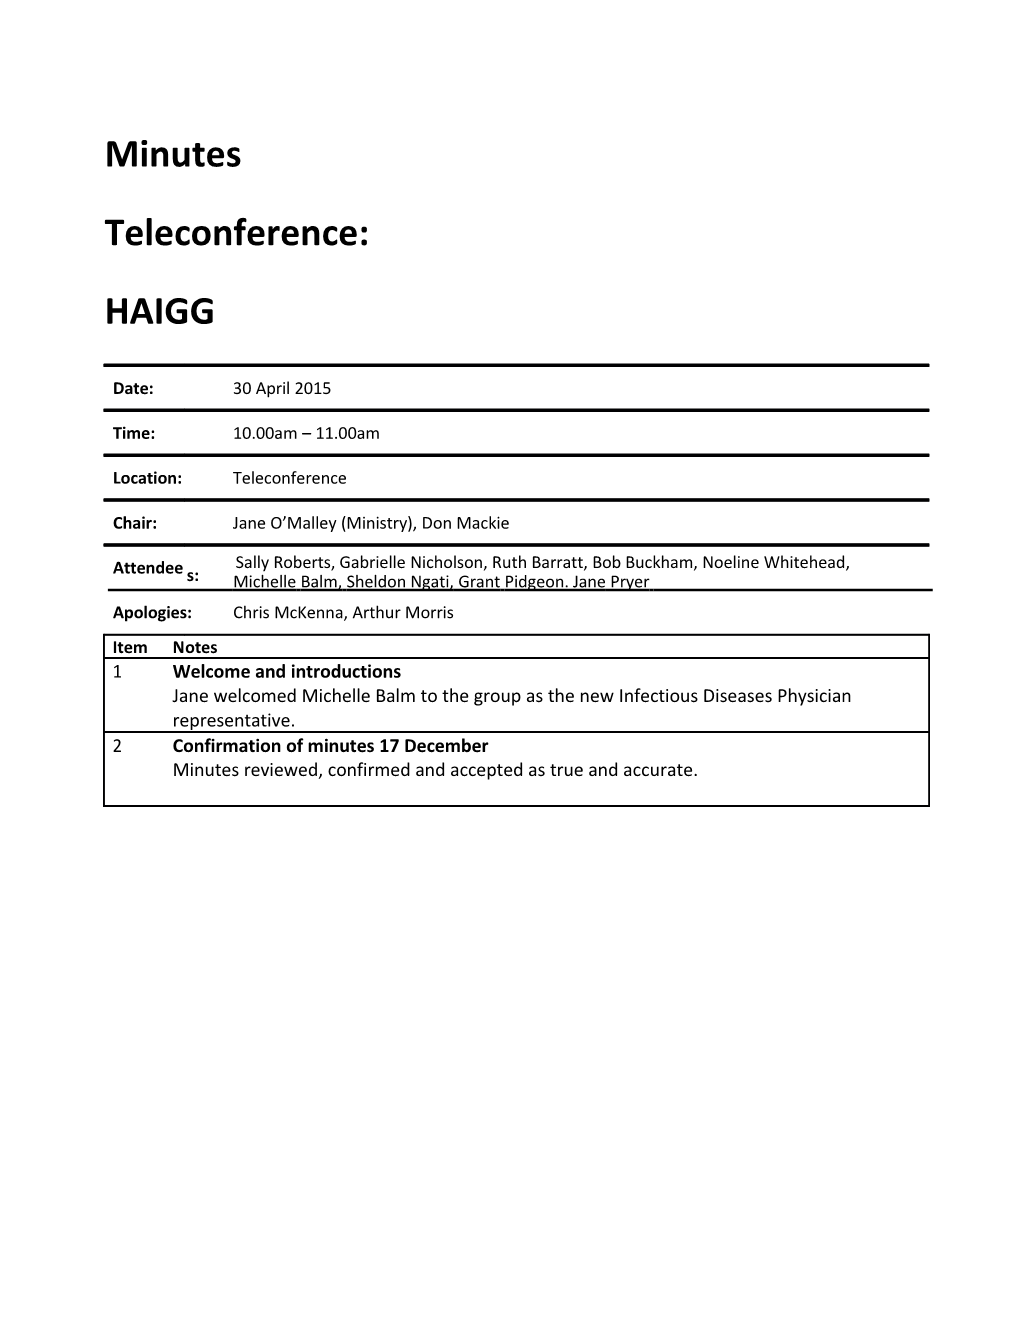 Minutes Teleconference: HAIGG 30 April 2015